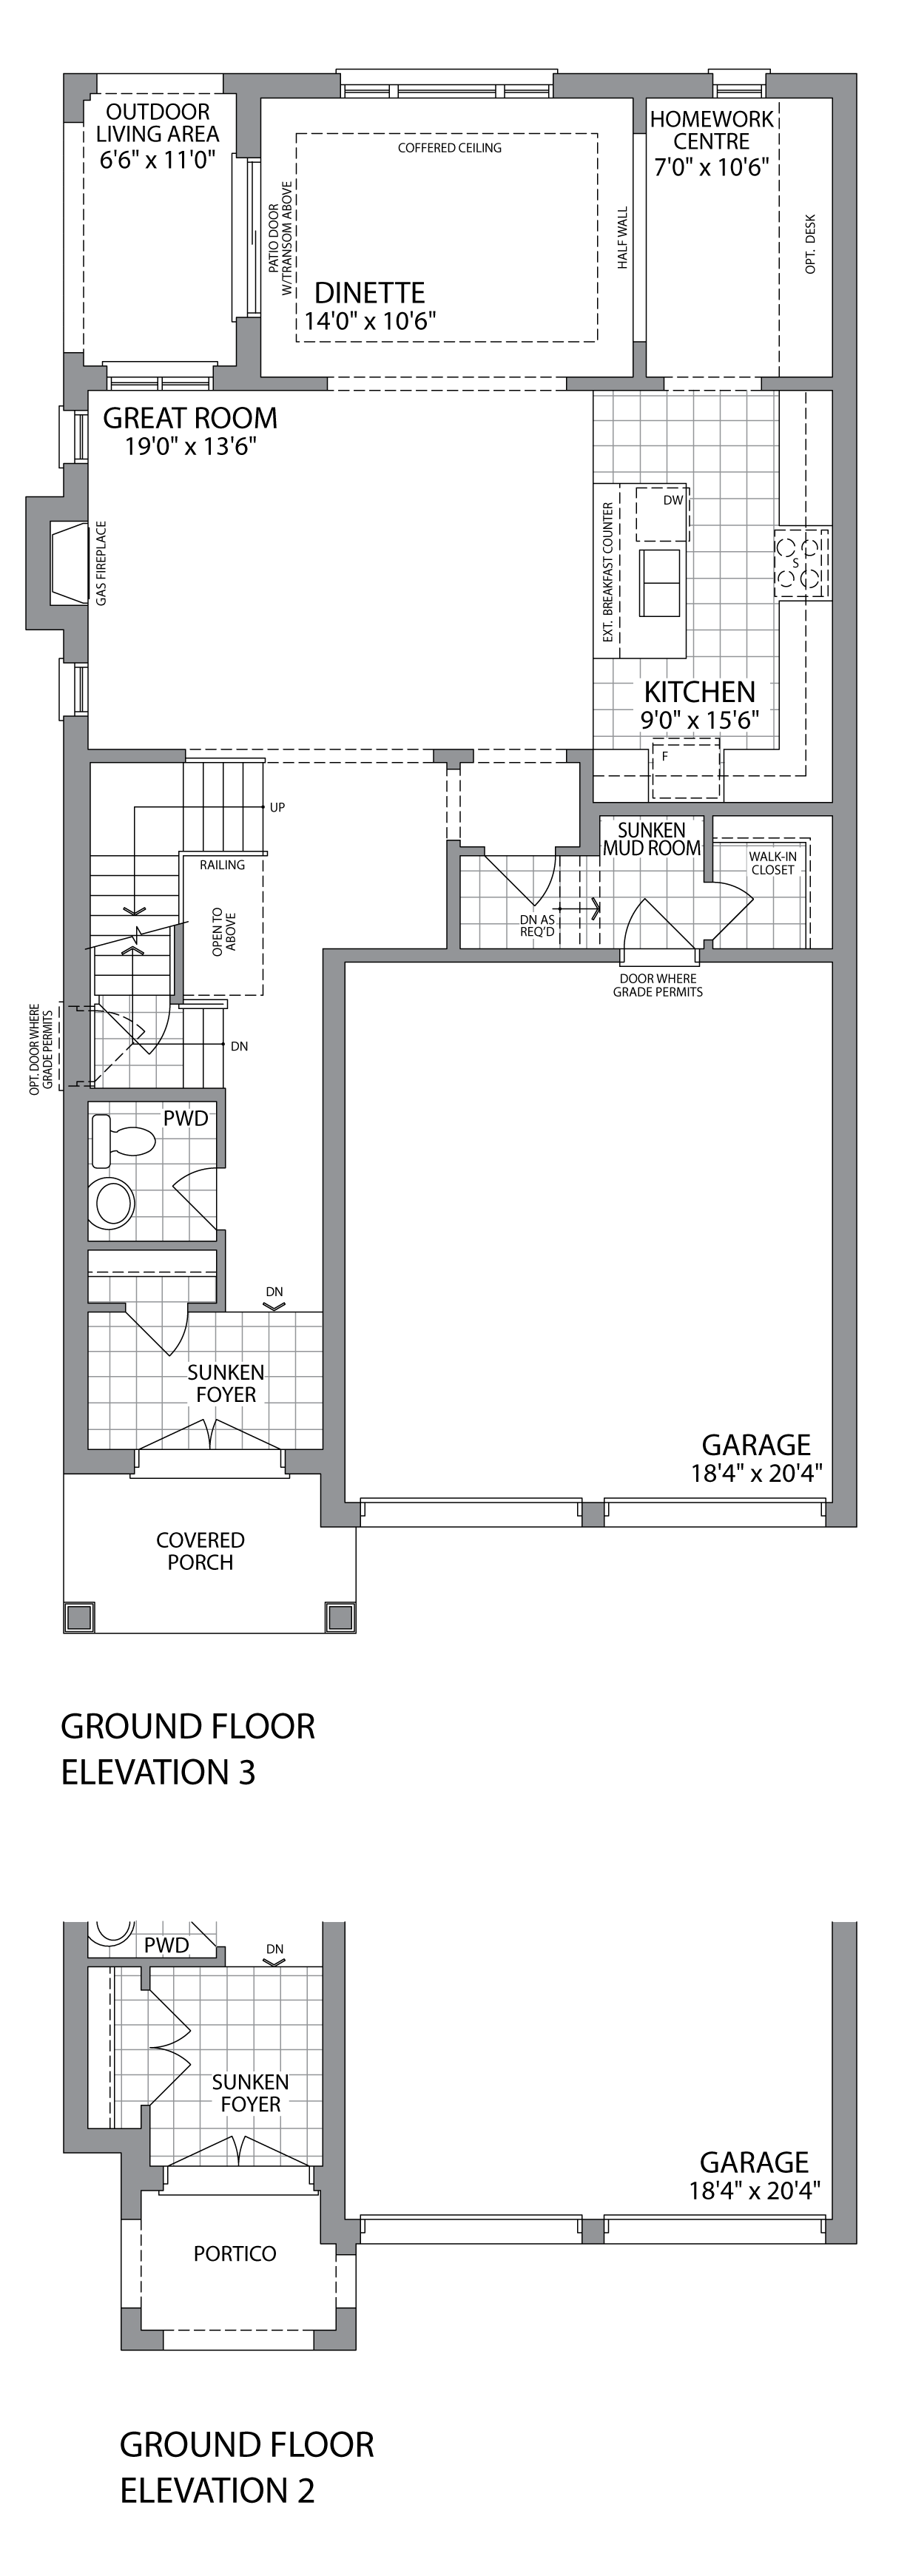 The BROOKHAVEN Ground Floor